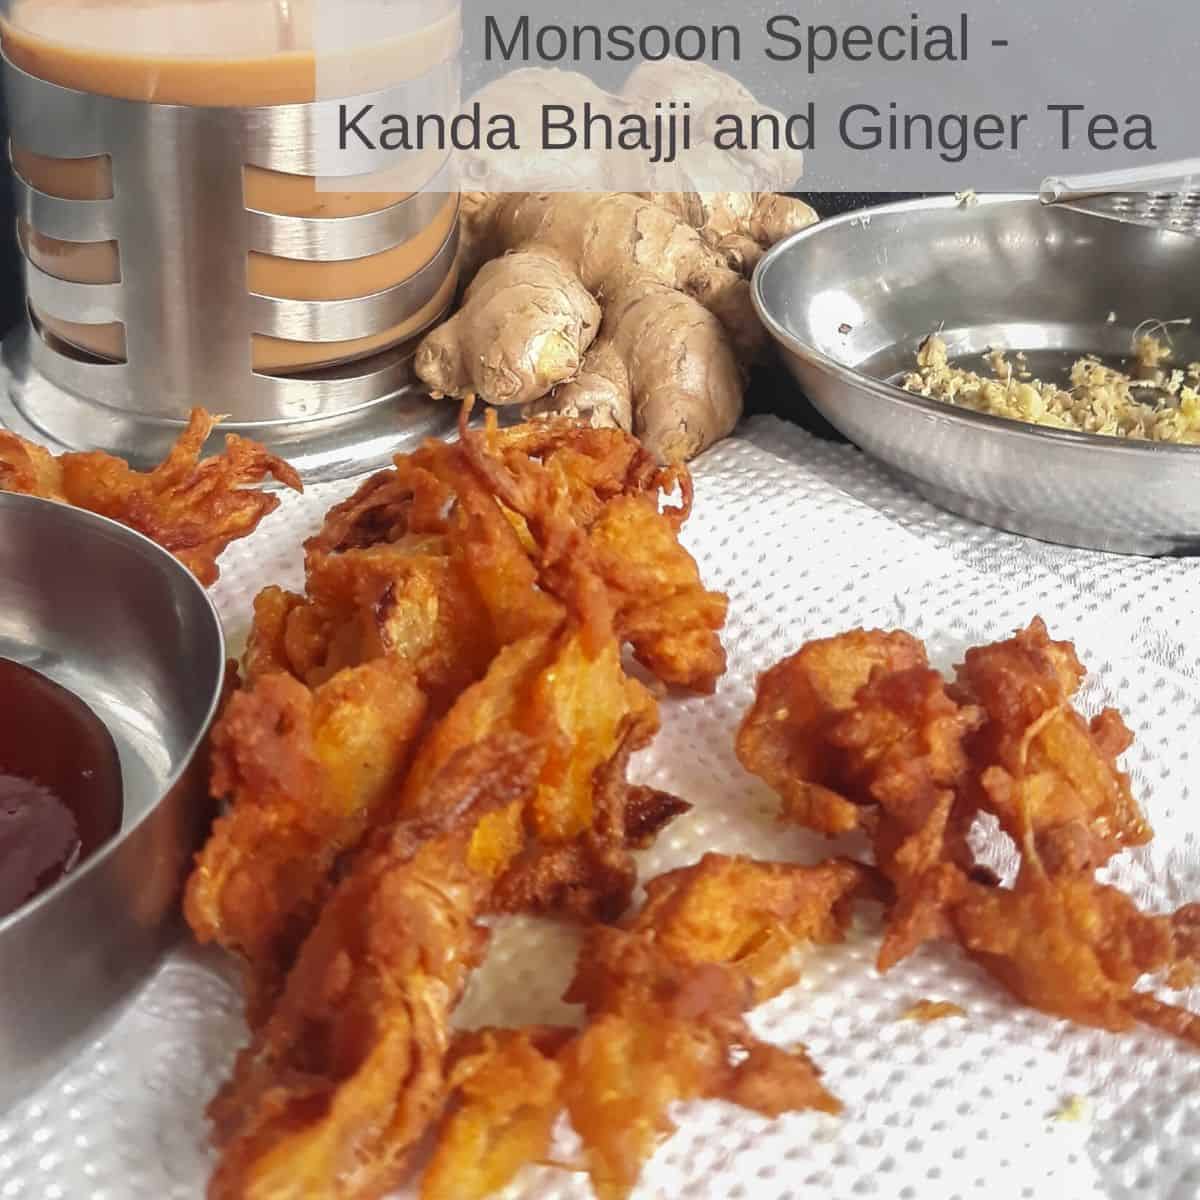 Tea and Kanda Bhaji